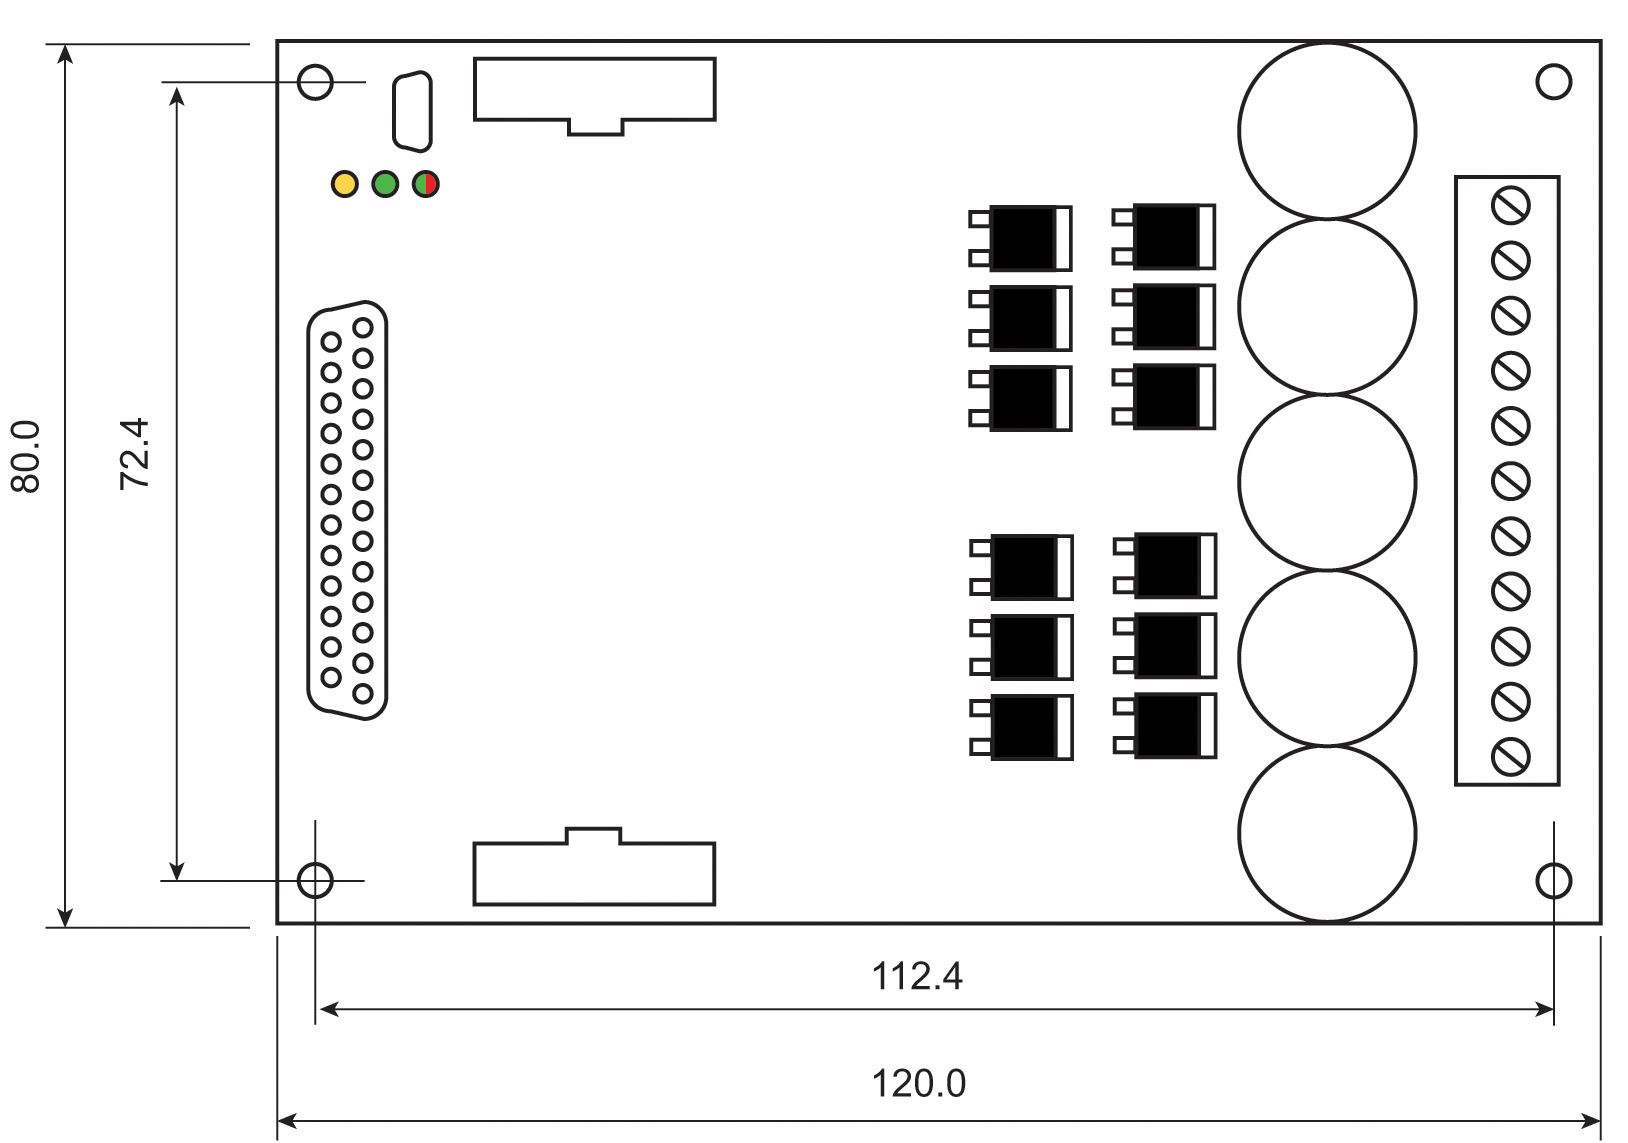 SDC3260 60V 3x15A Brushed DC Motor Controller- Click to Enlarge